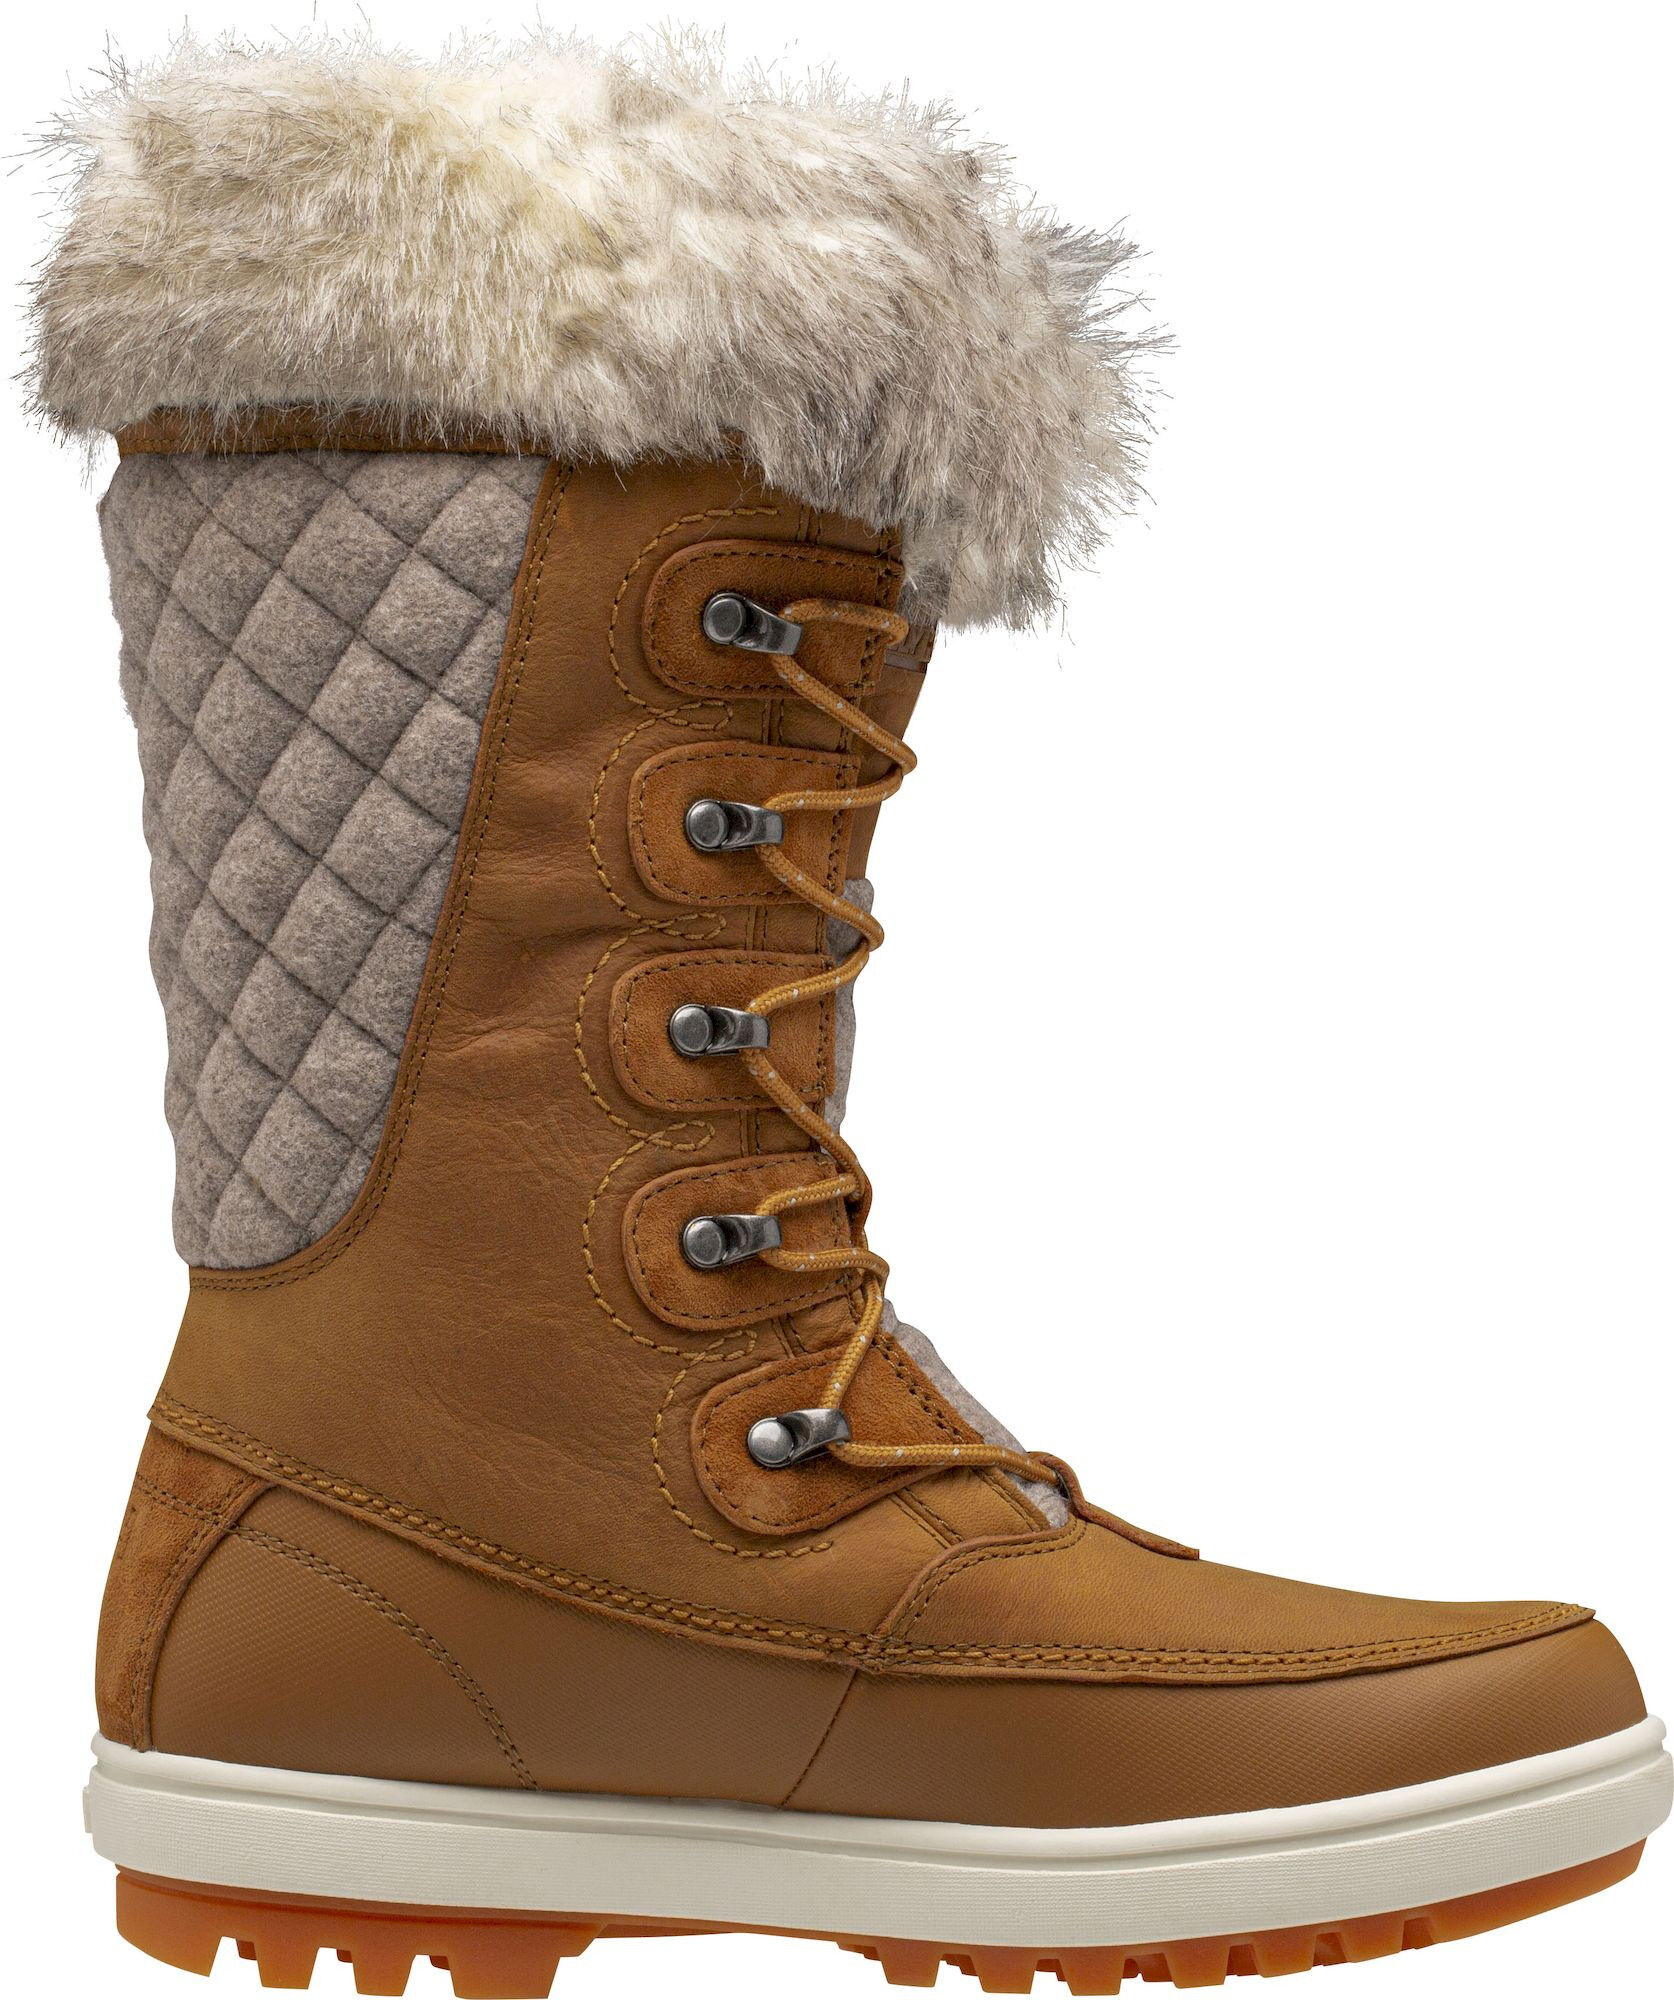 Helly Hansen Garibaldi Vl - Snow boots - Women's